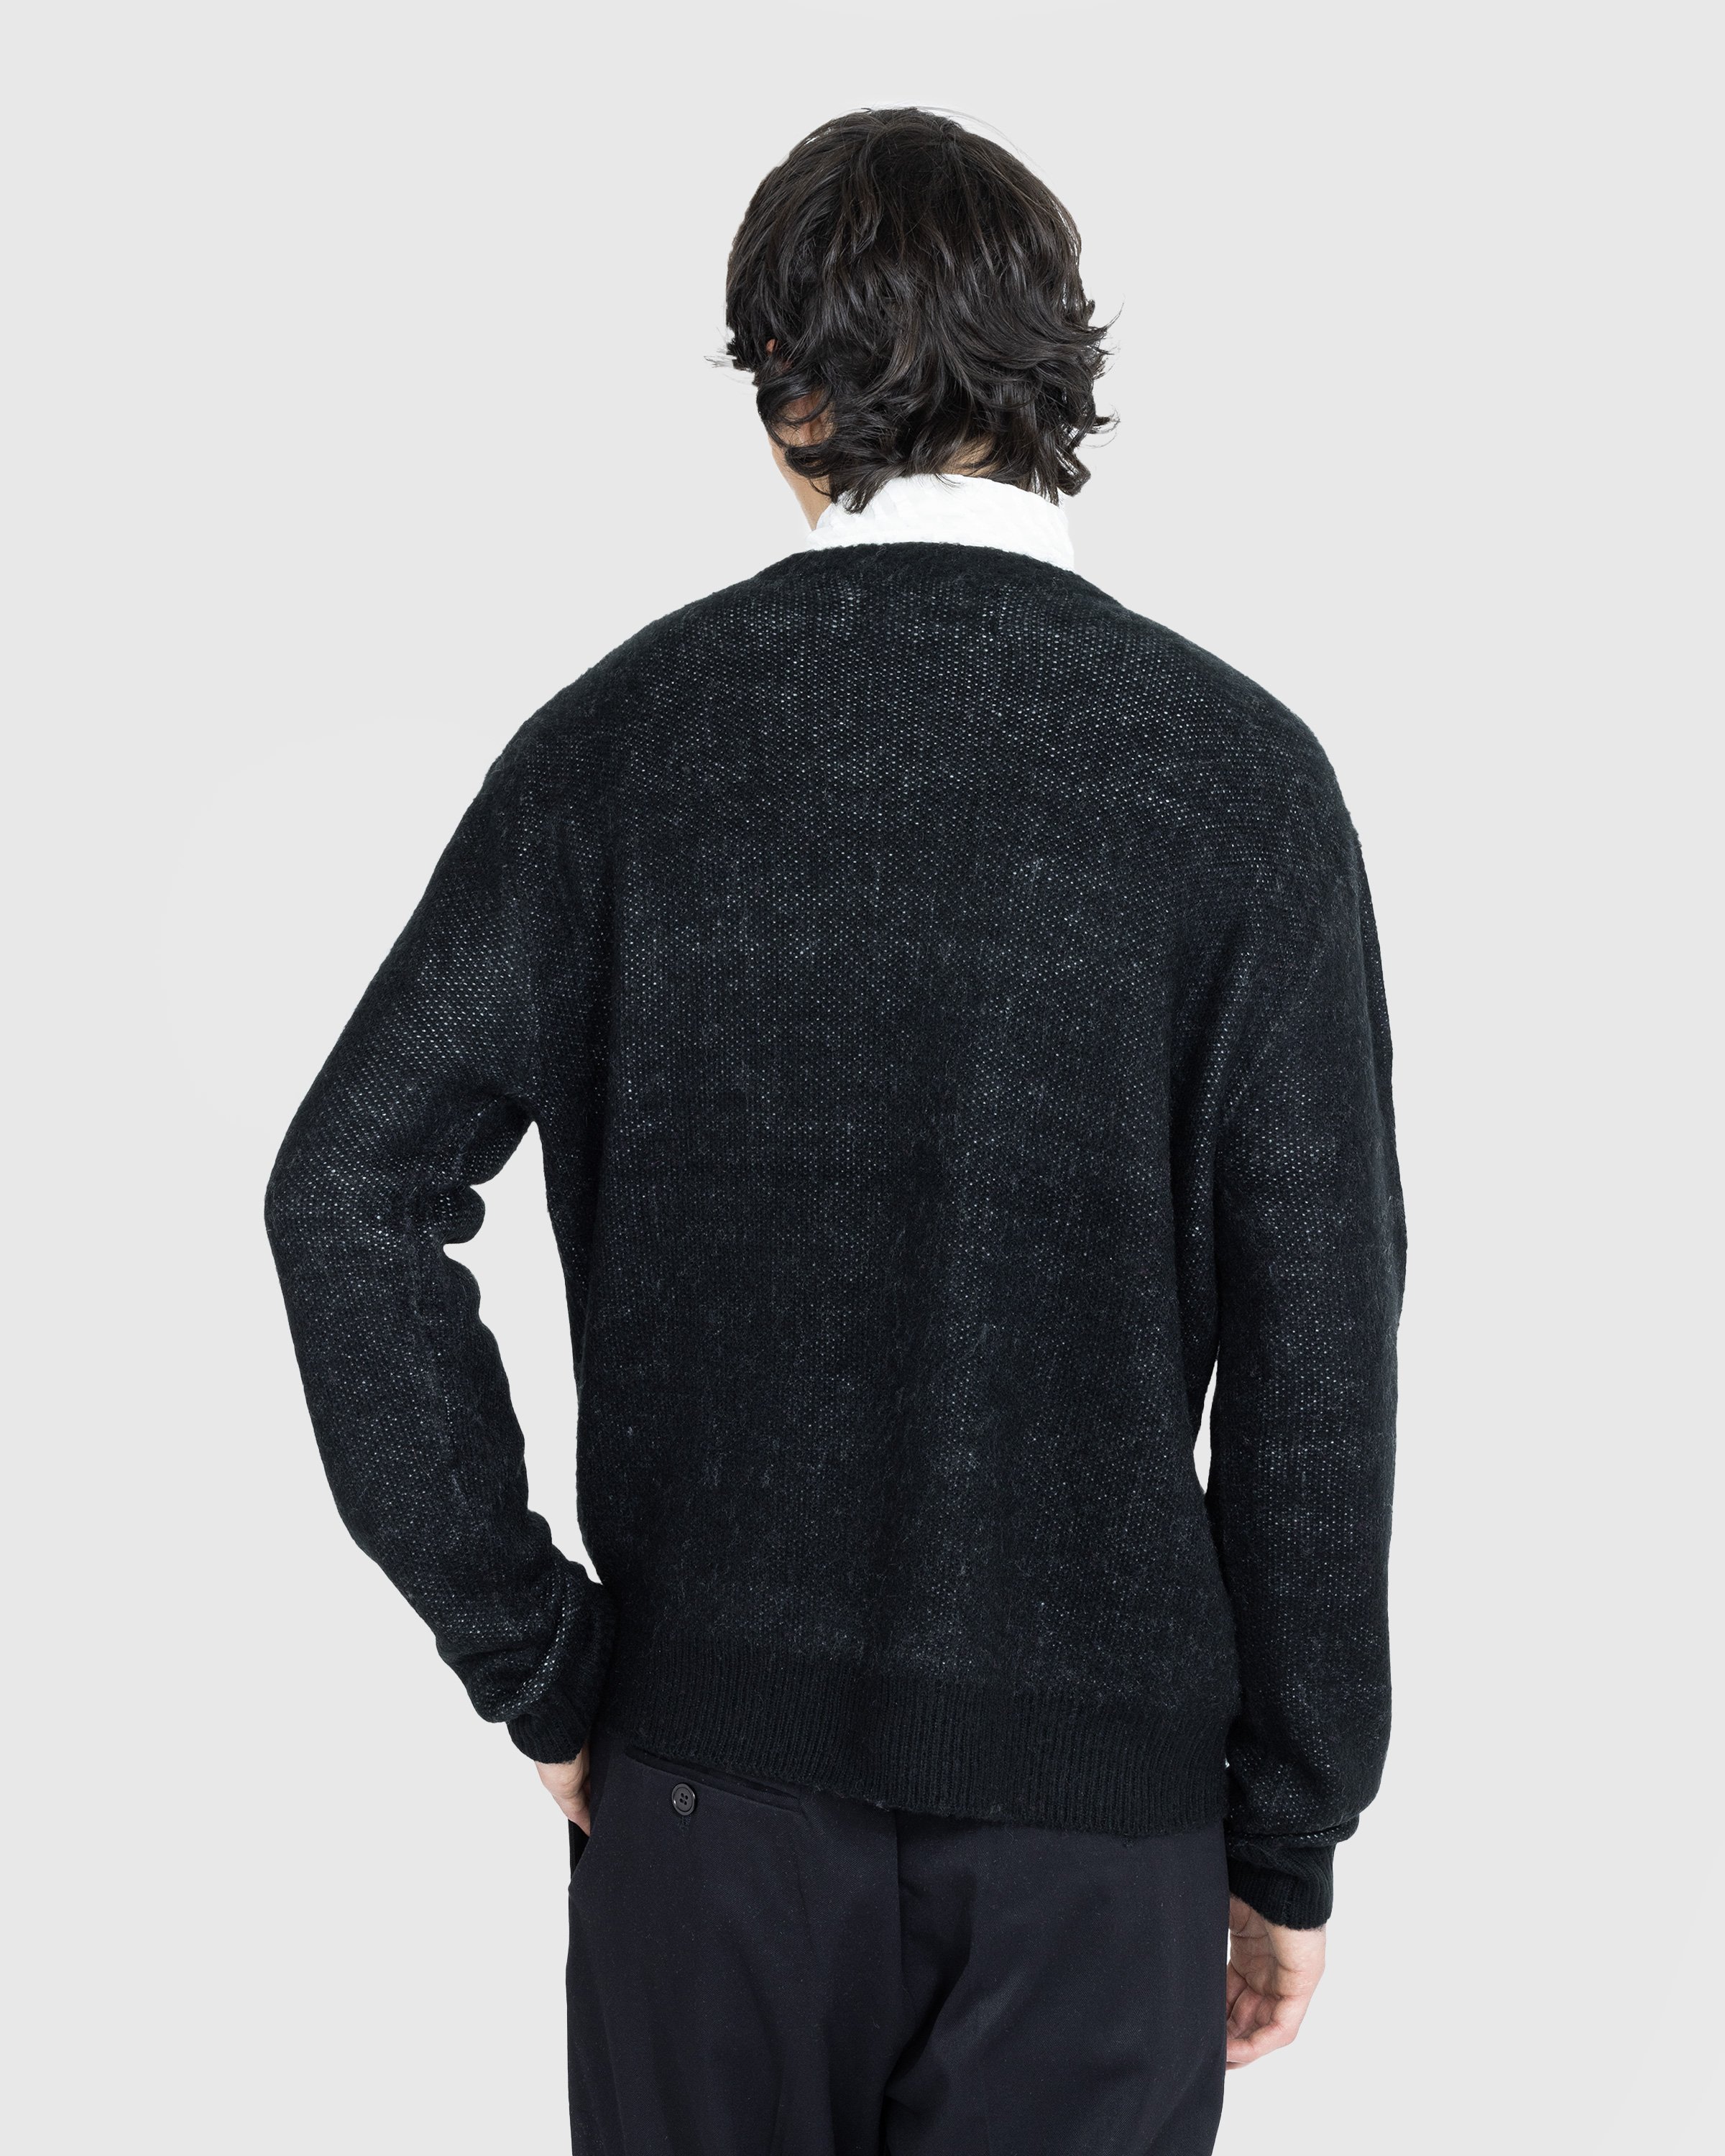 Noon Goons - Gatekeeper Sweater Black - Clothing - Black - Image 4